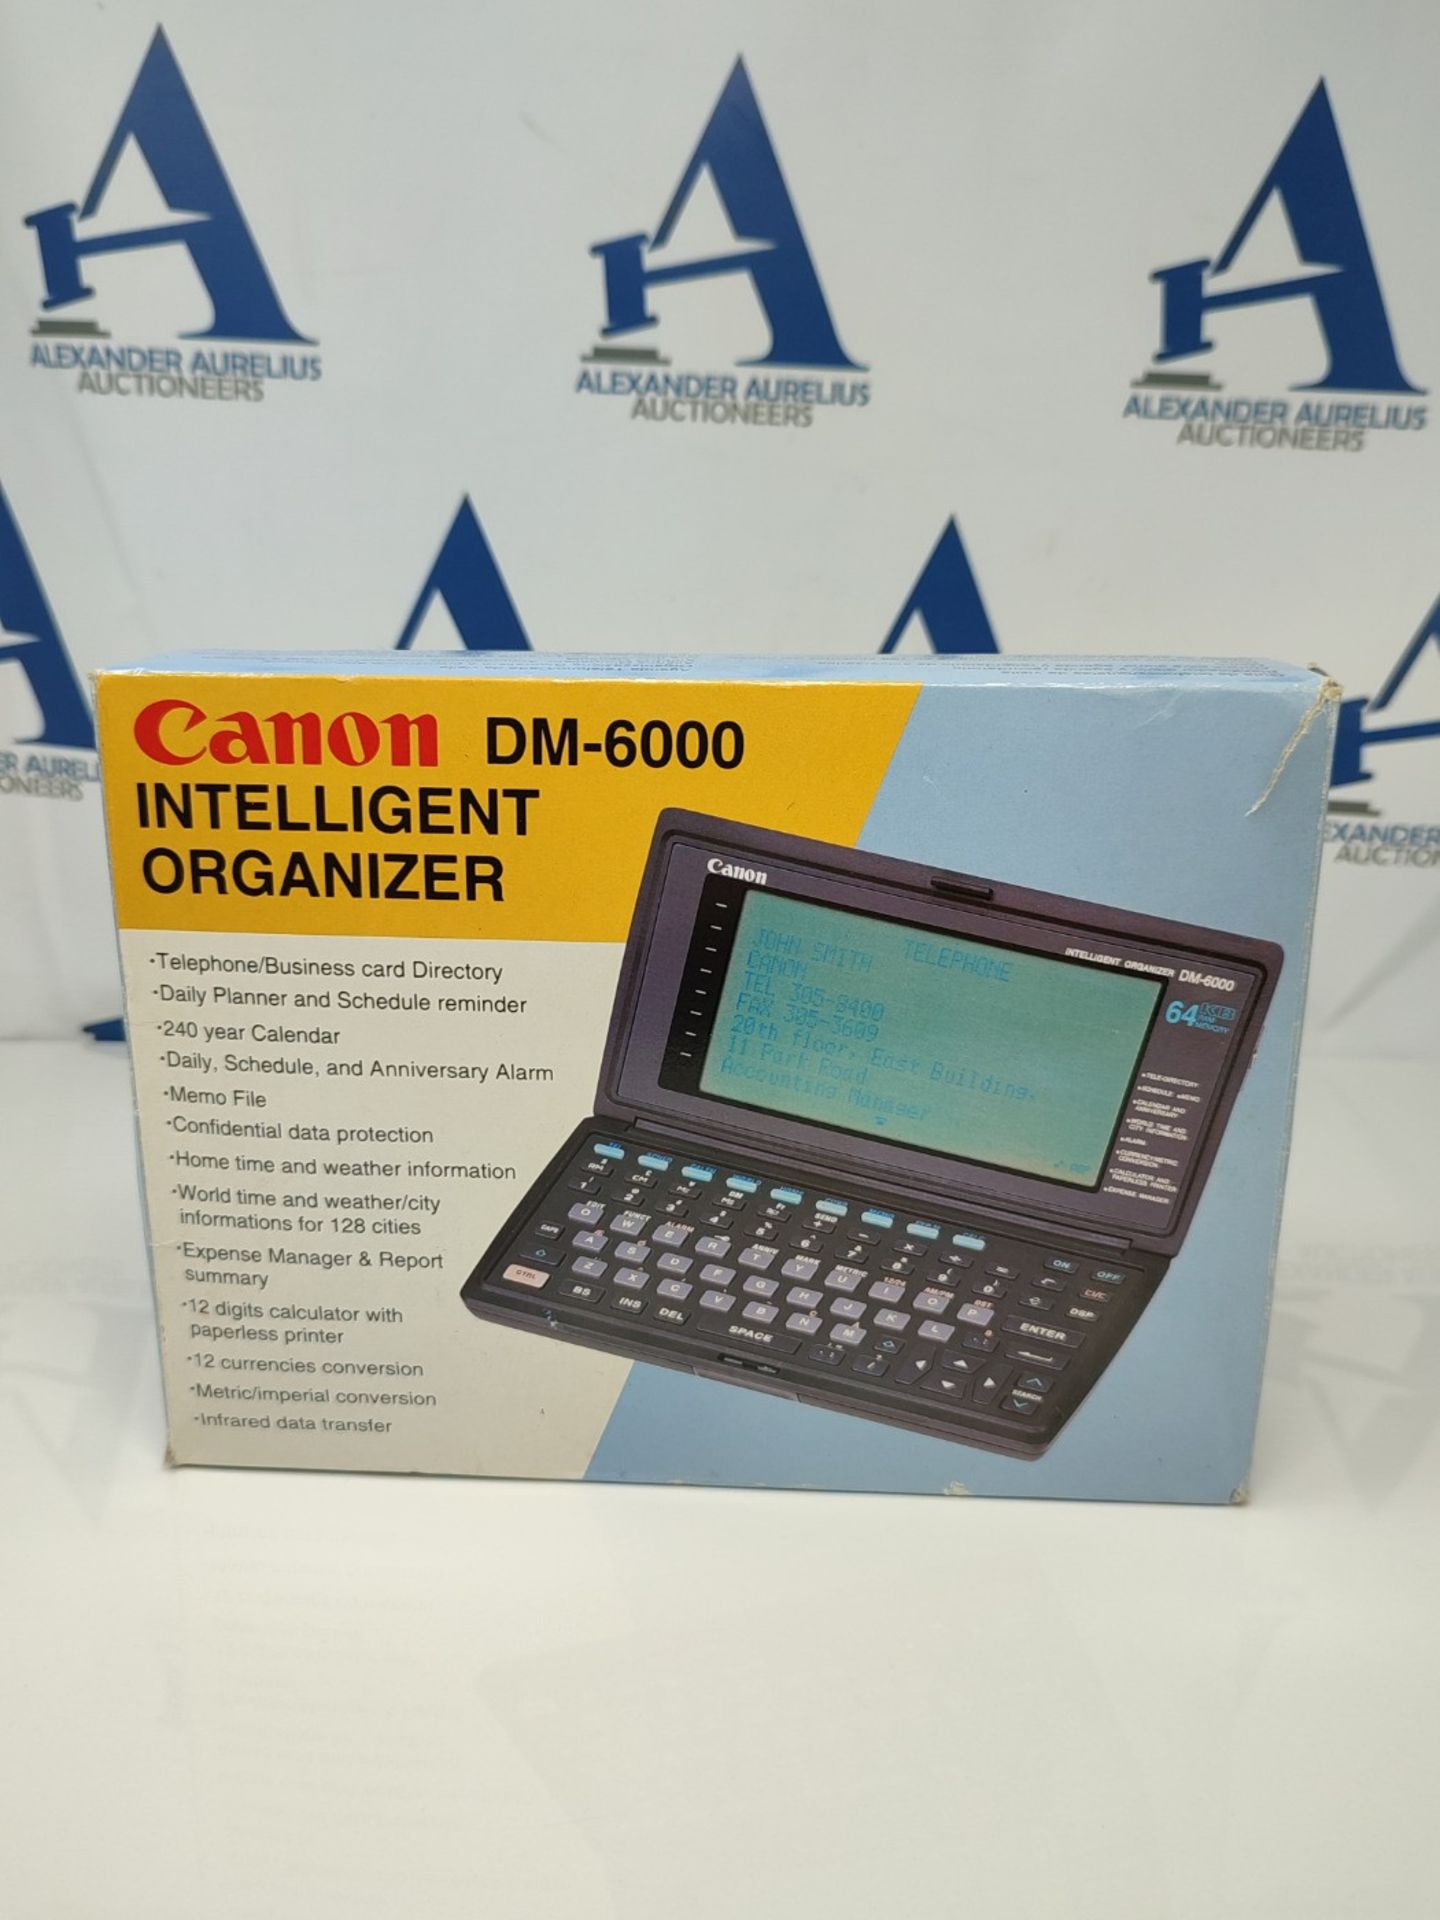 Canon DM-6000 - Intelligent Organizer - Image 2 of 3